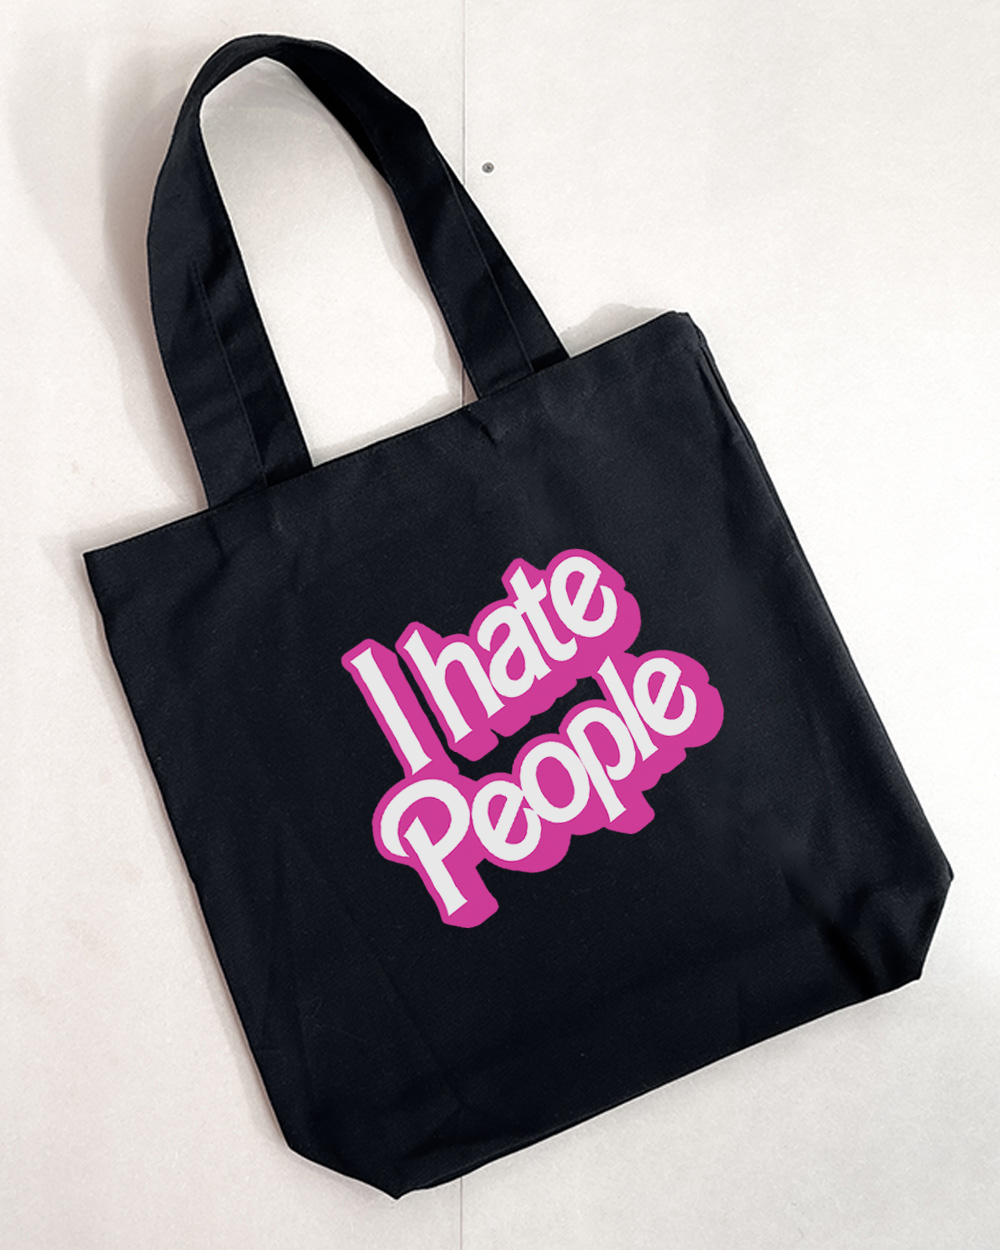 I Hate People Tote Bag Black